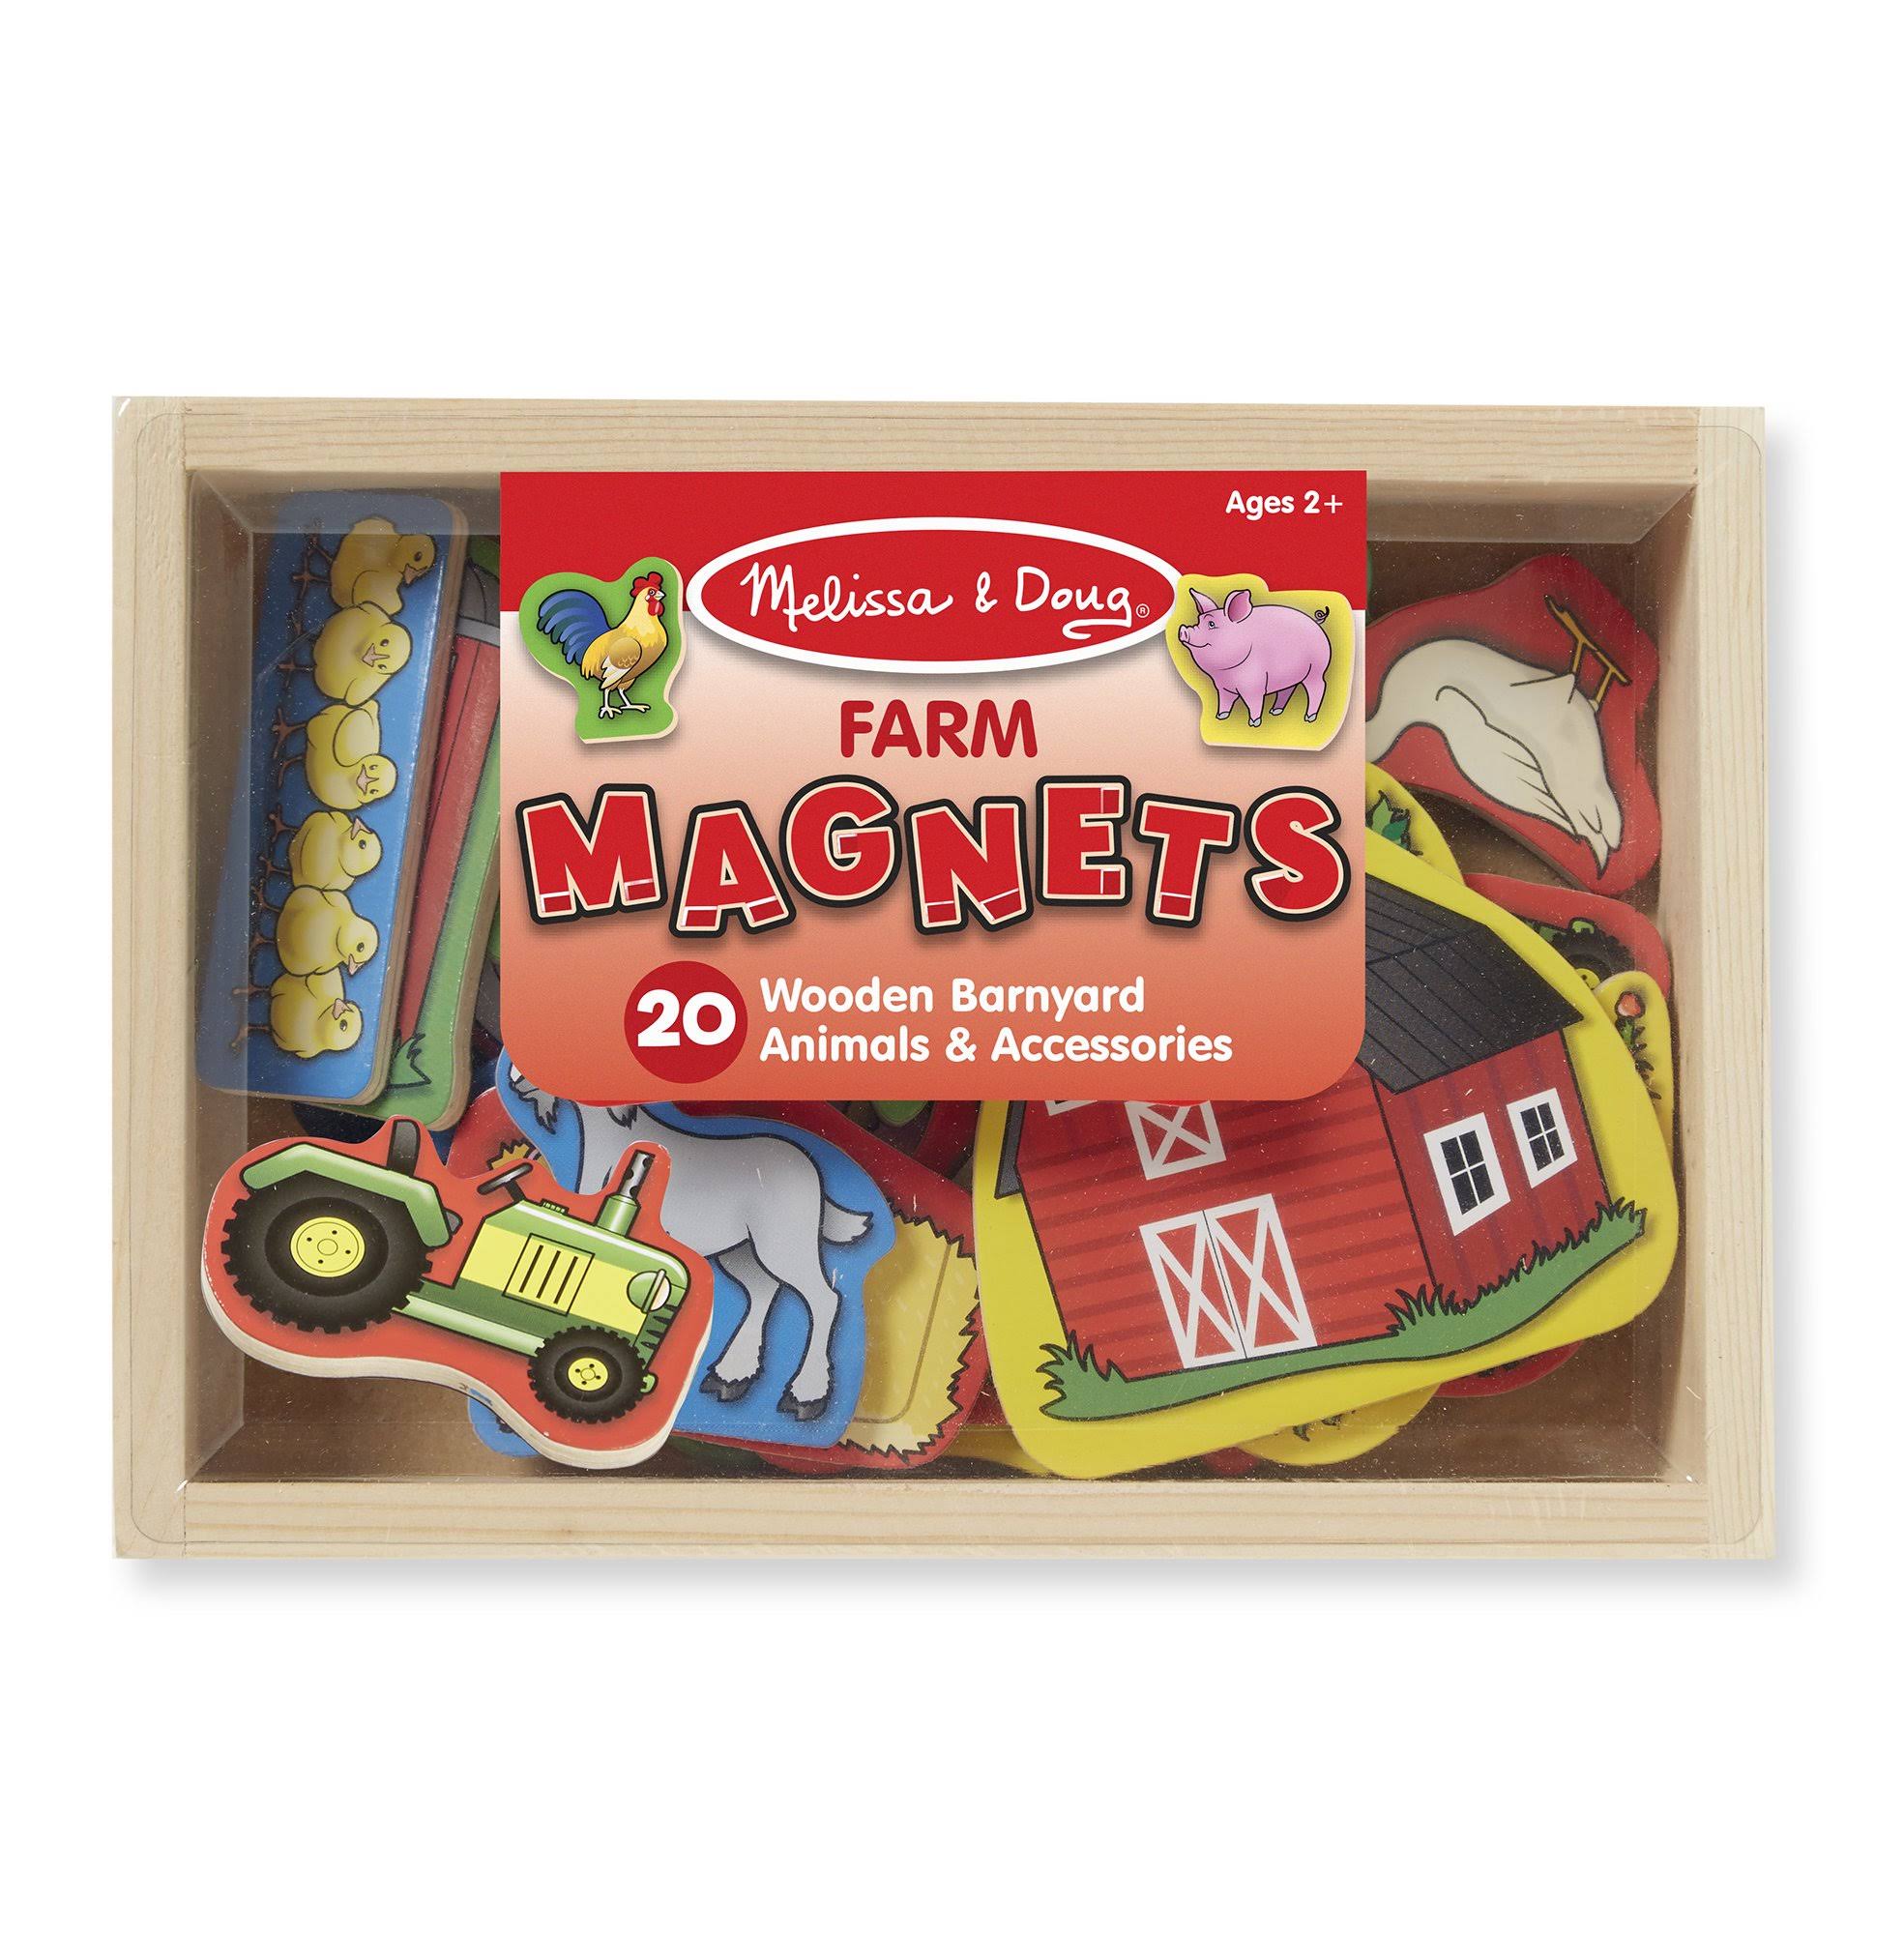 Melissa & Doug Wooden Farm Magnets - 20 Wooden Farm Magnets